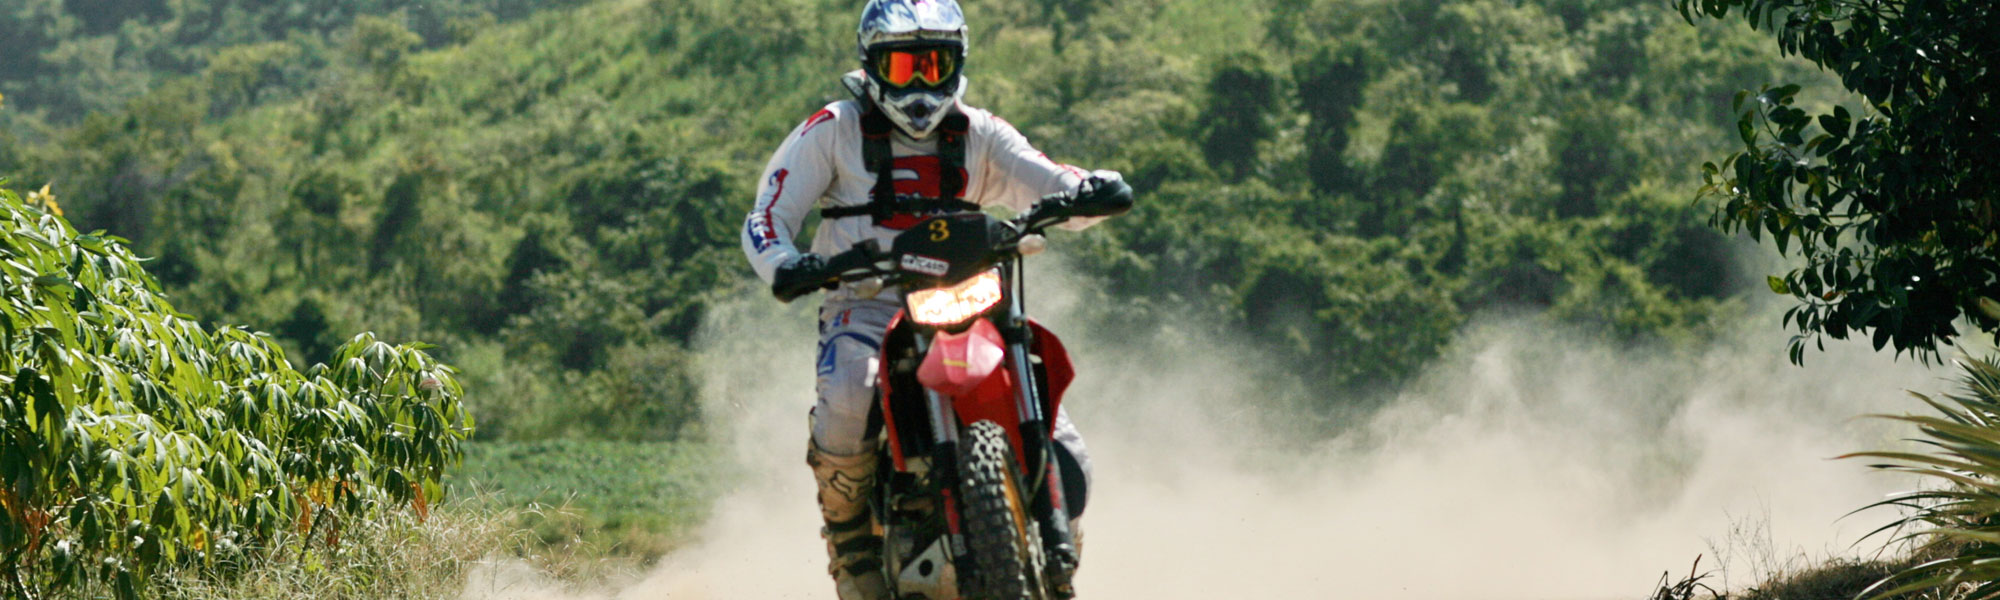 Motorbiking companies in Asia